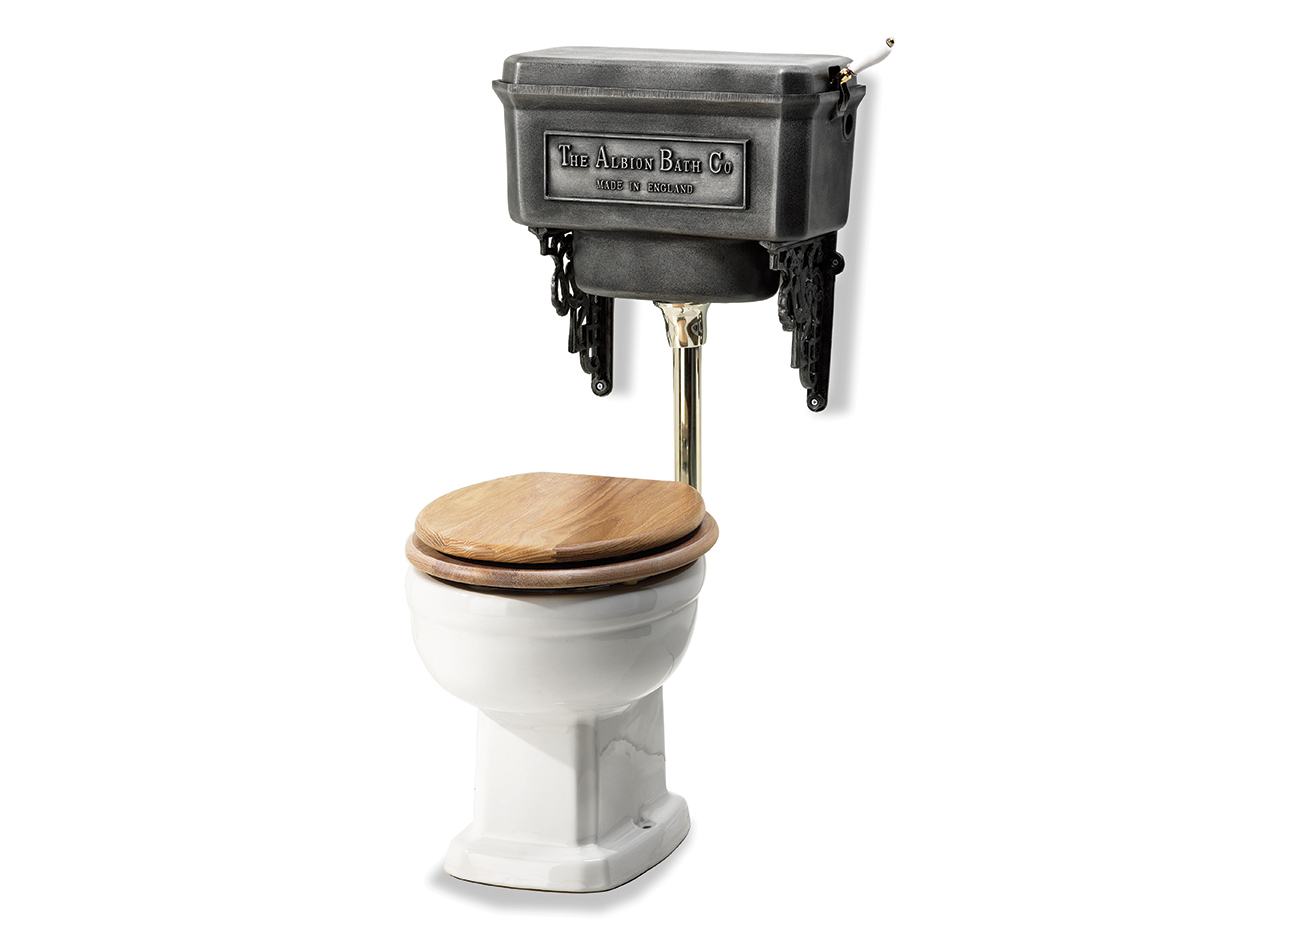 Split Alice Gebakjes Klassiek toilet met hooghangende stortbak - Mistley van Albion Bath Co